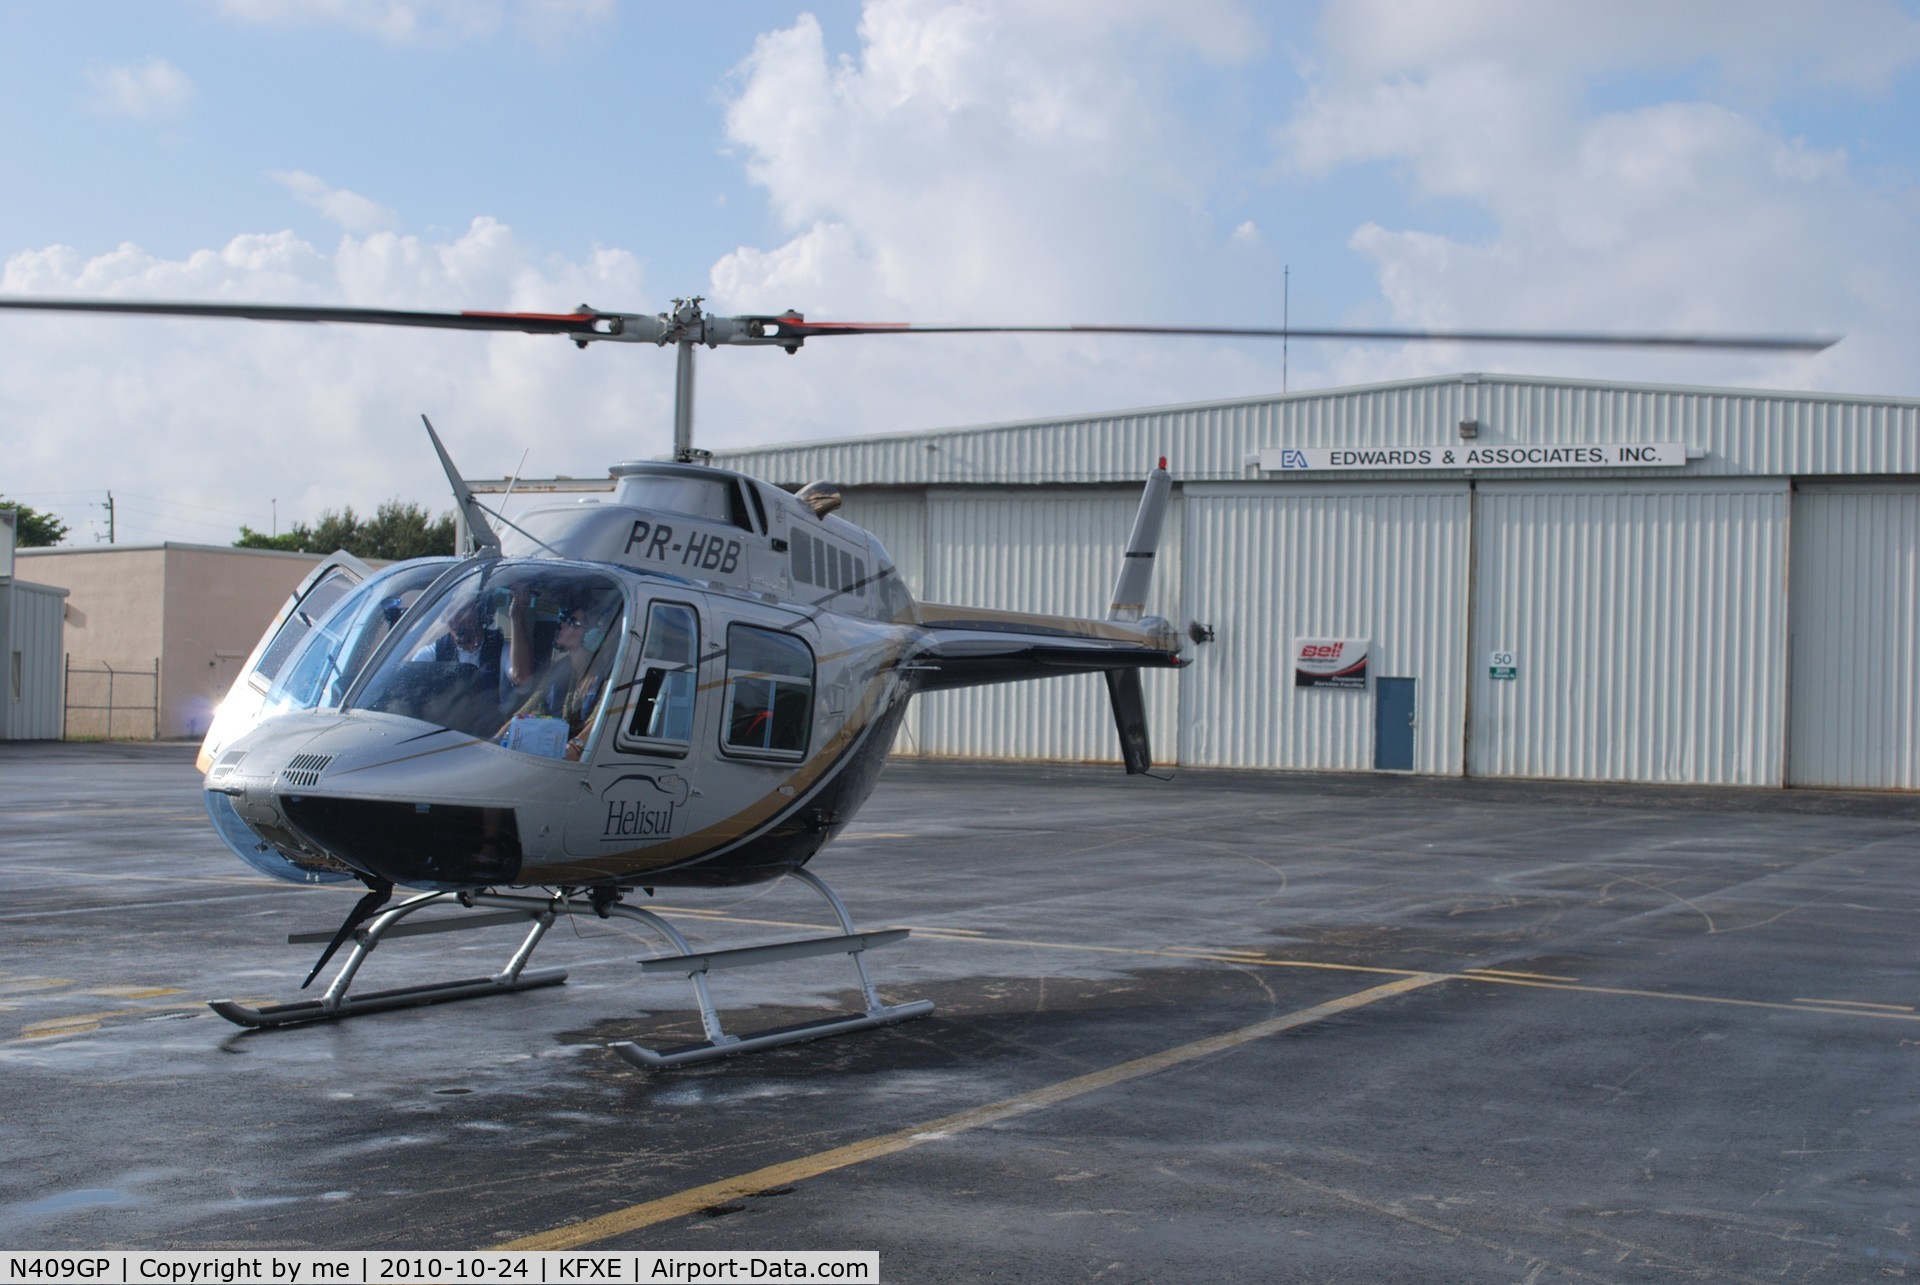 N409GP, 2010 Bell 206B C/N 4688, Now PR-HBB owner Helisul Taxi Aereo BRAZIL